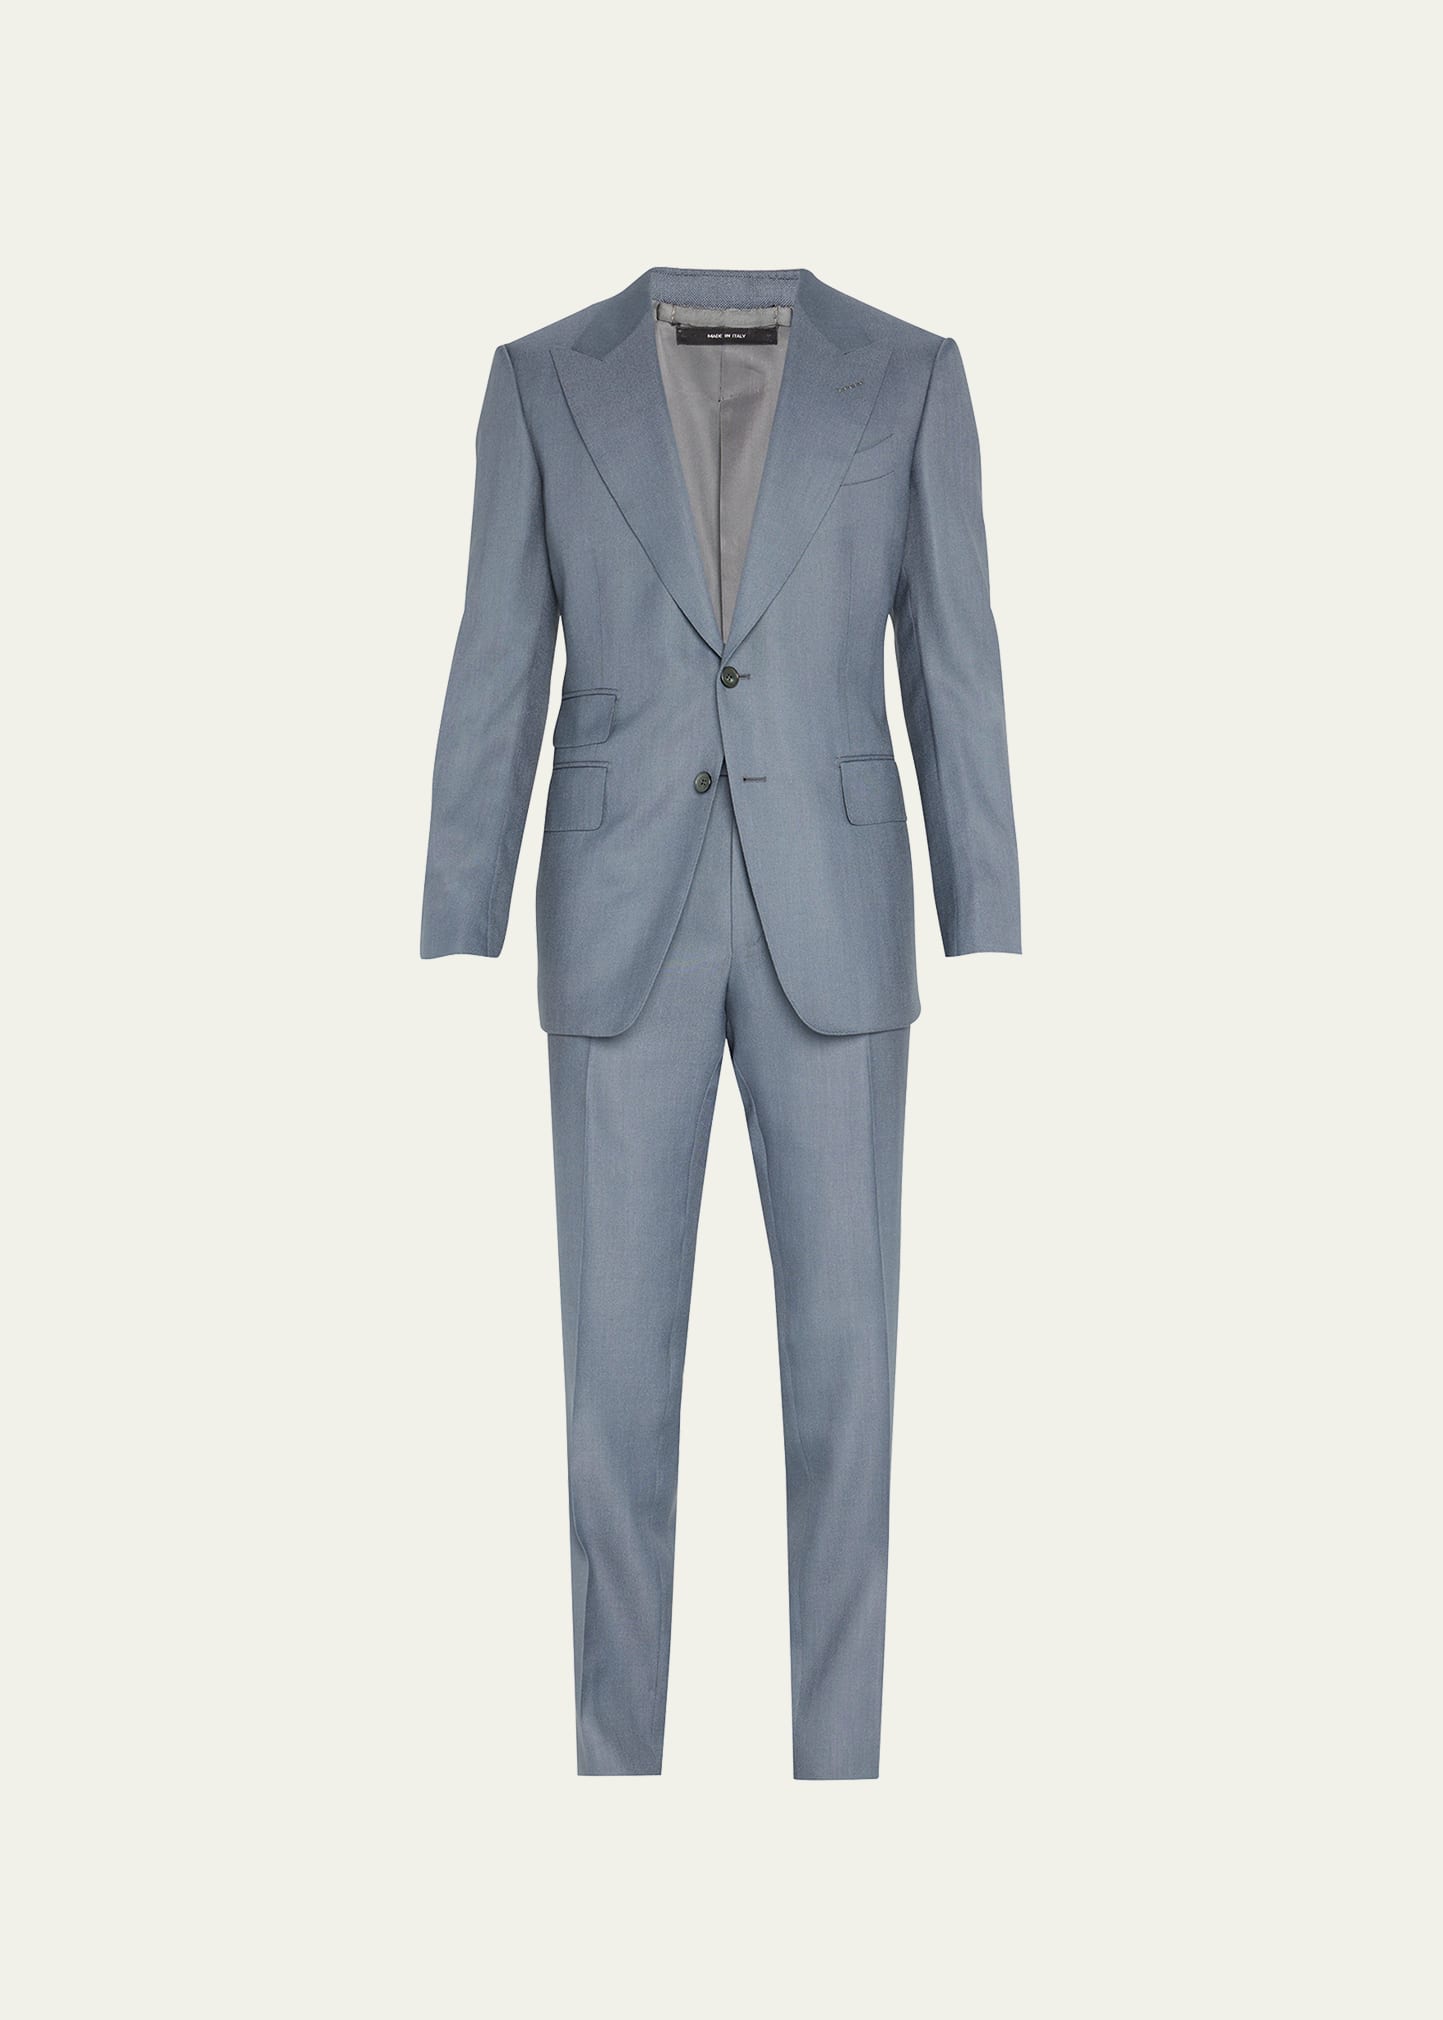 Tom Ford Men's Solid Hopsack Peak-lapel Suit In Dark Grey Solid | ModeSens